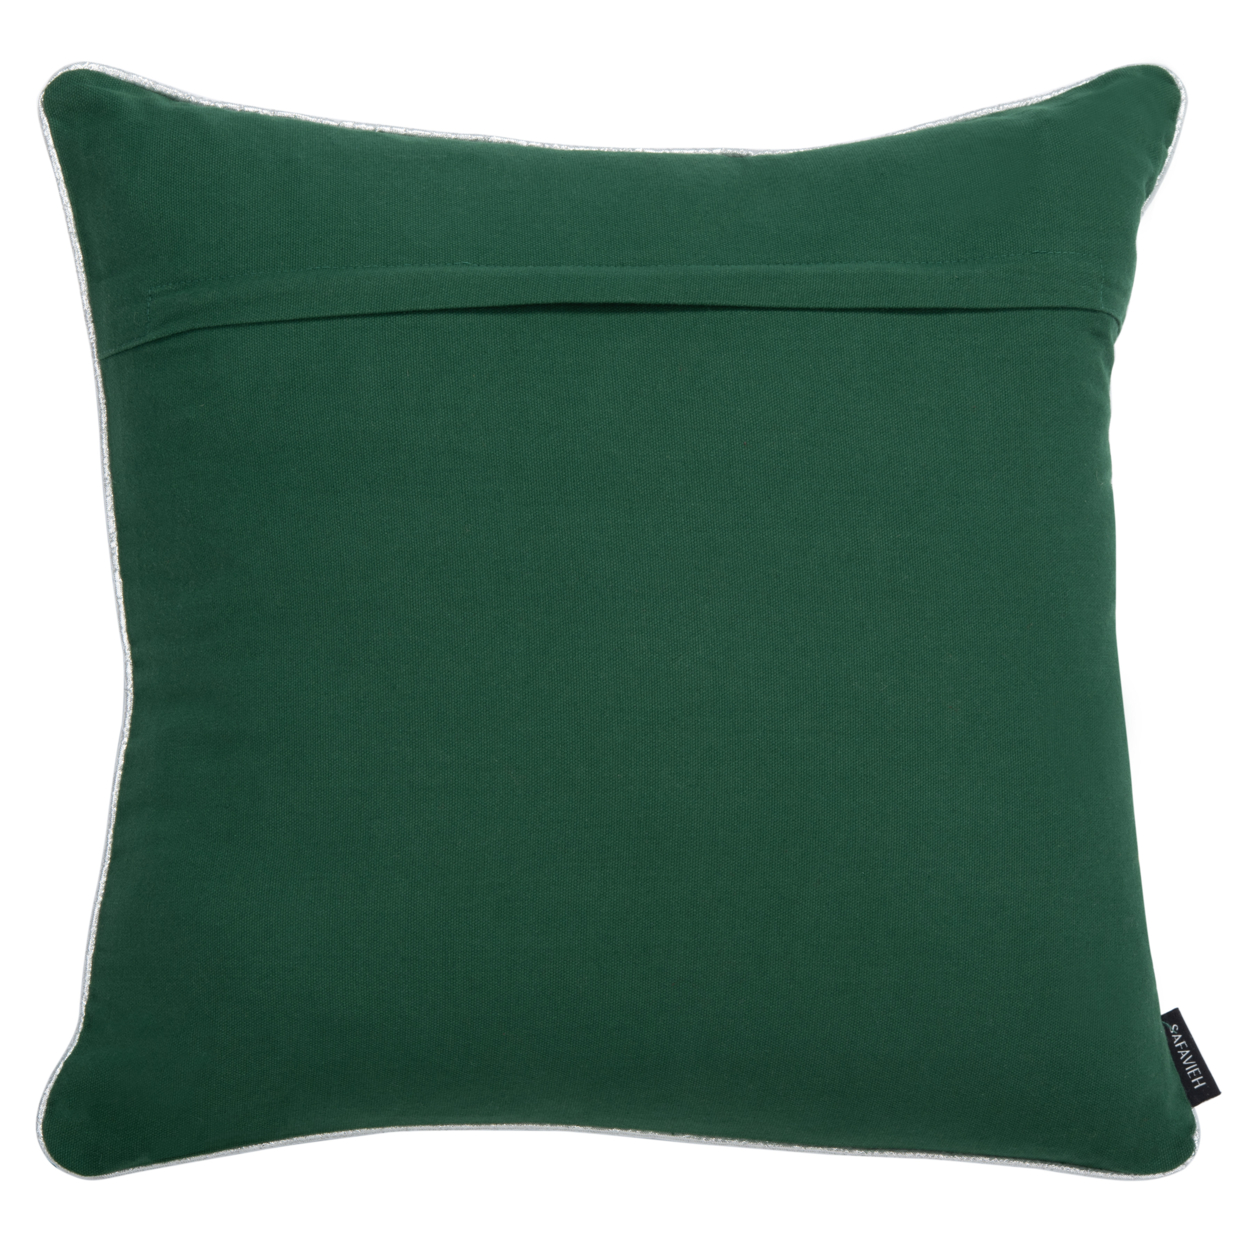 SAFAVIEH Winter Tree Pillow Green / Silver